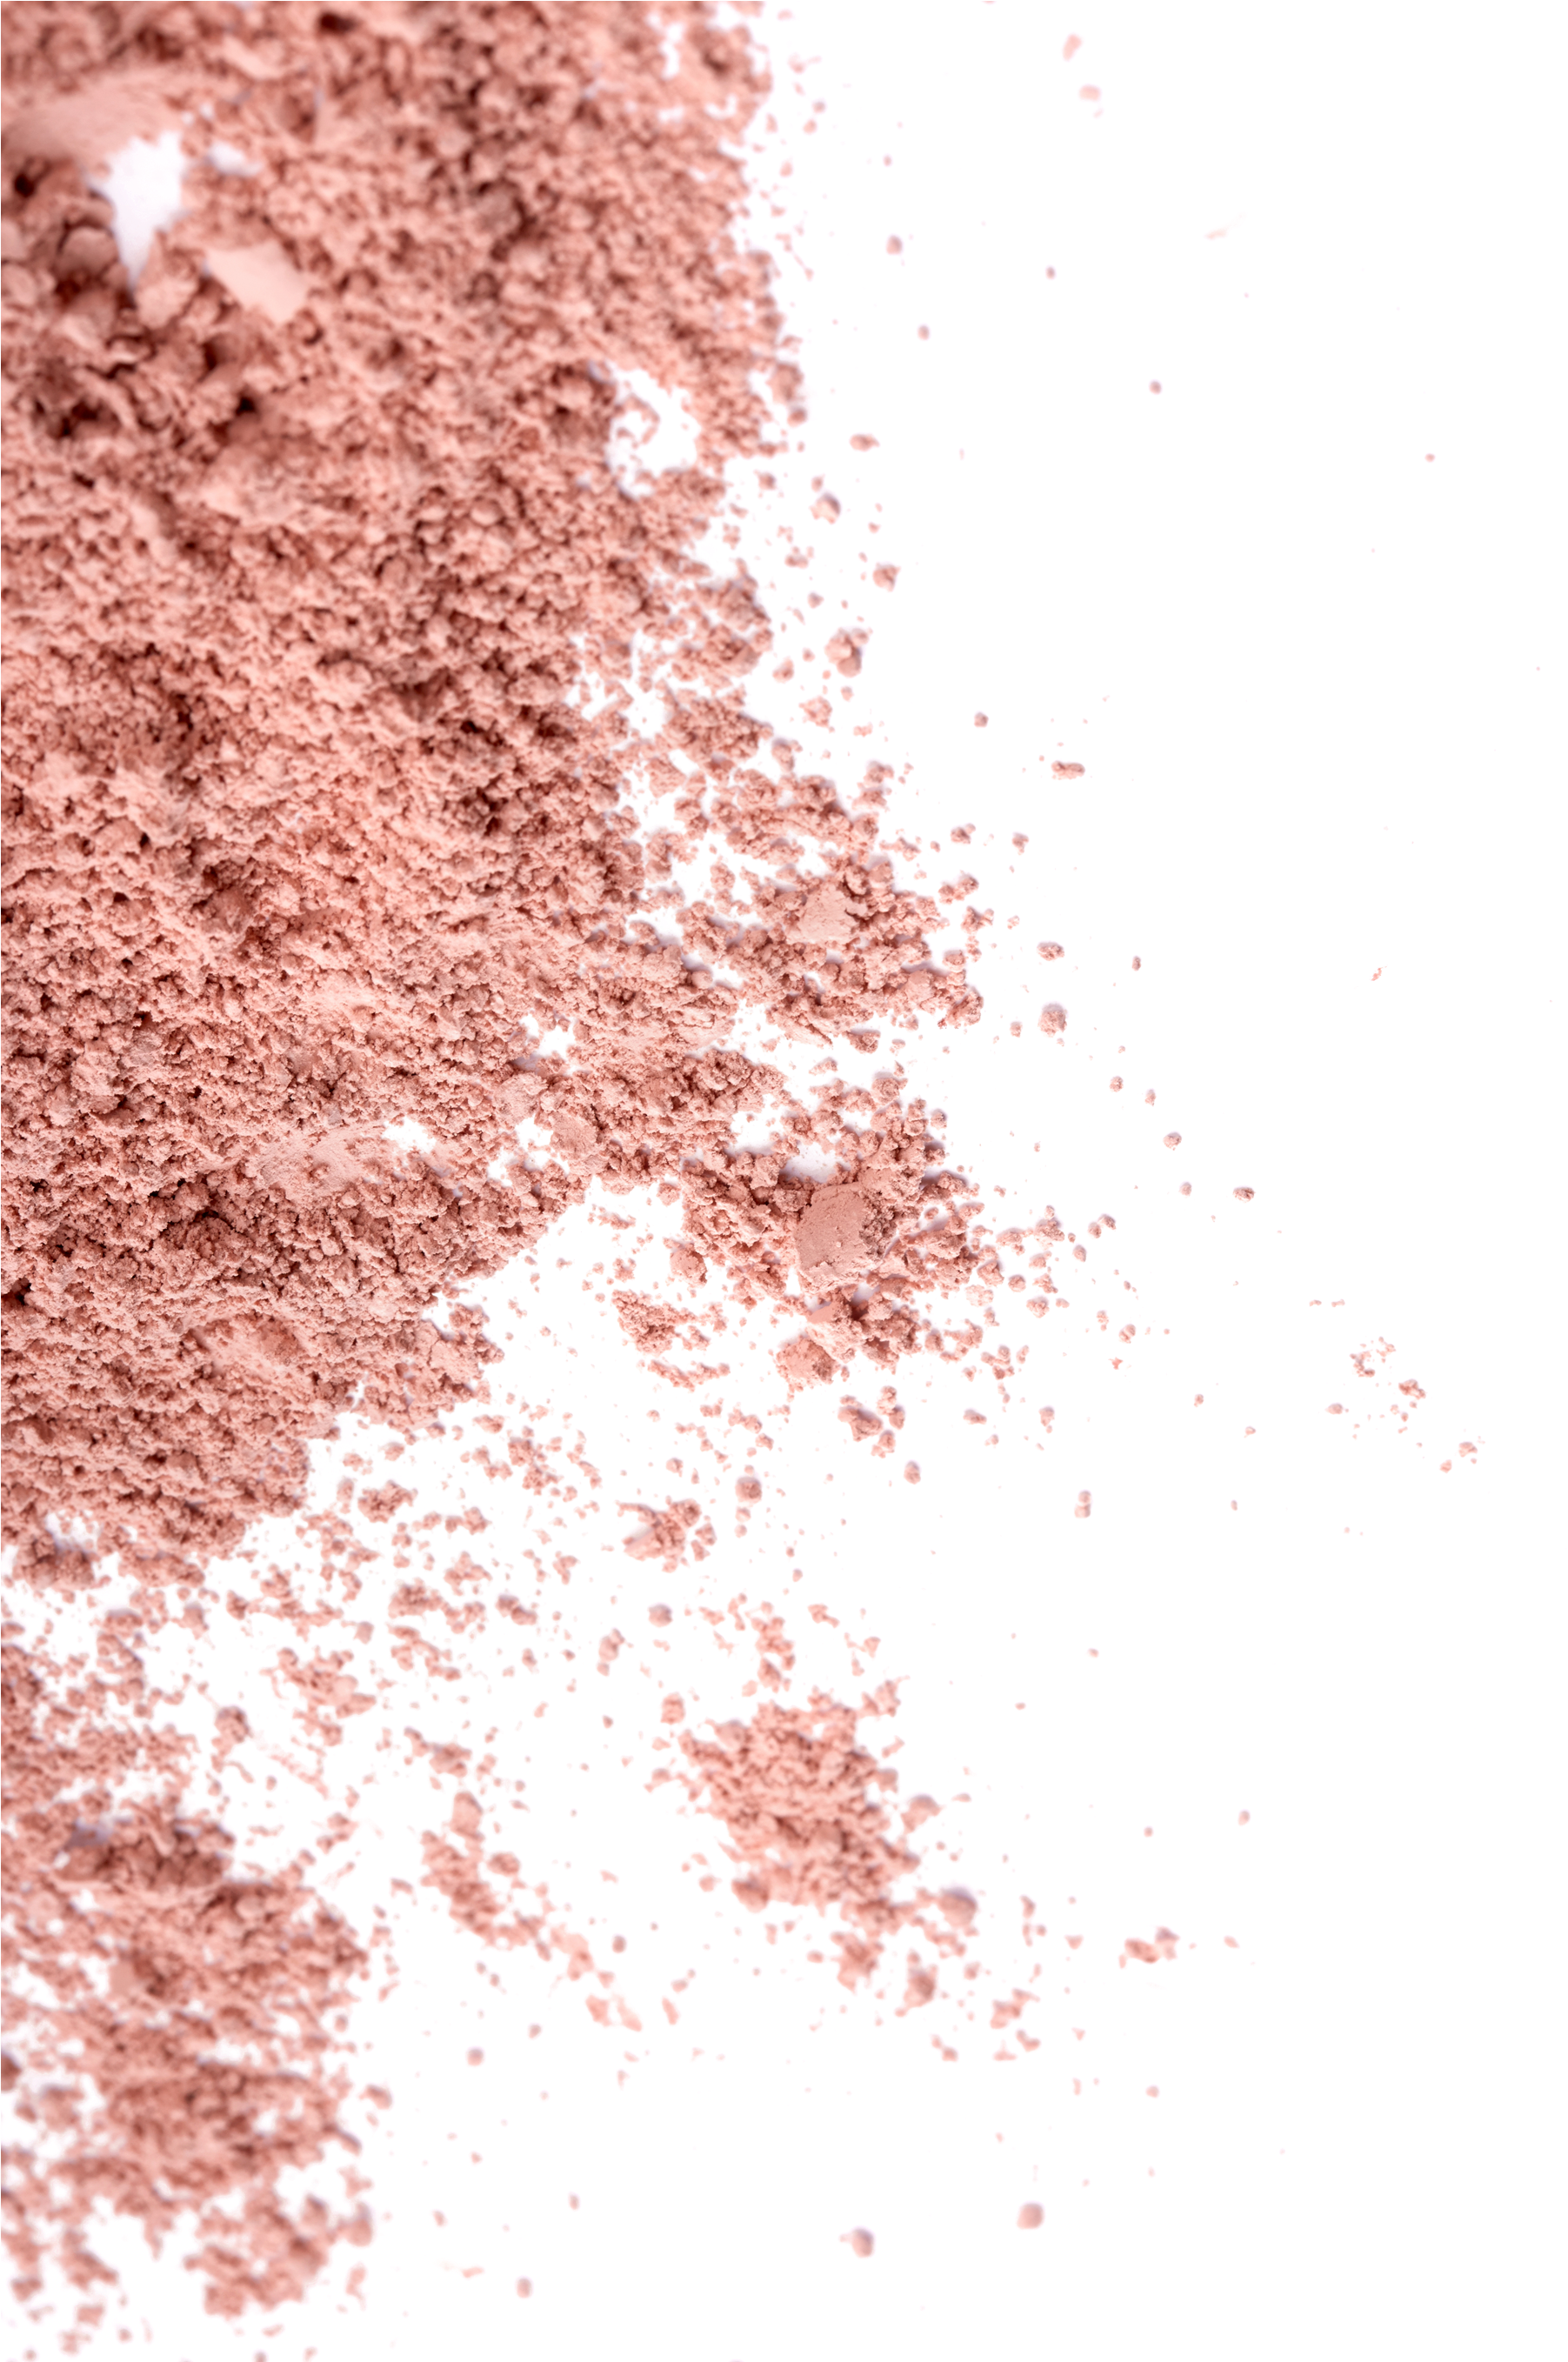 A Close Up Of A Powder